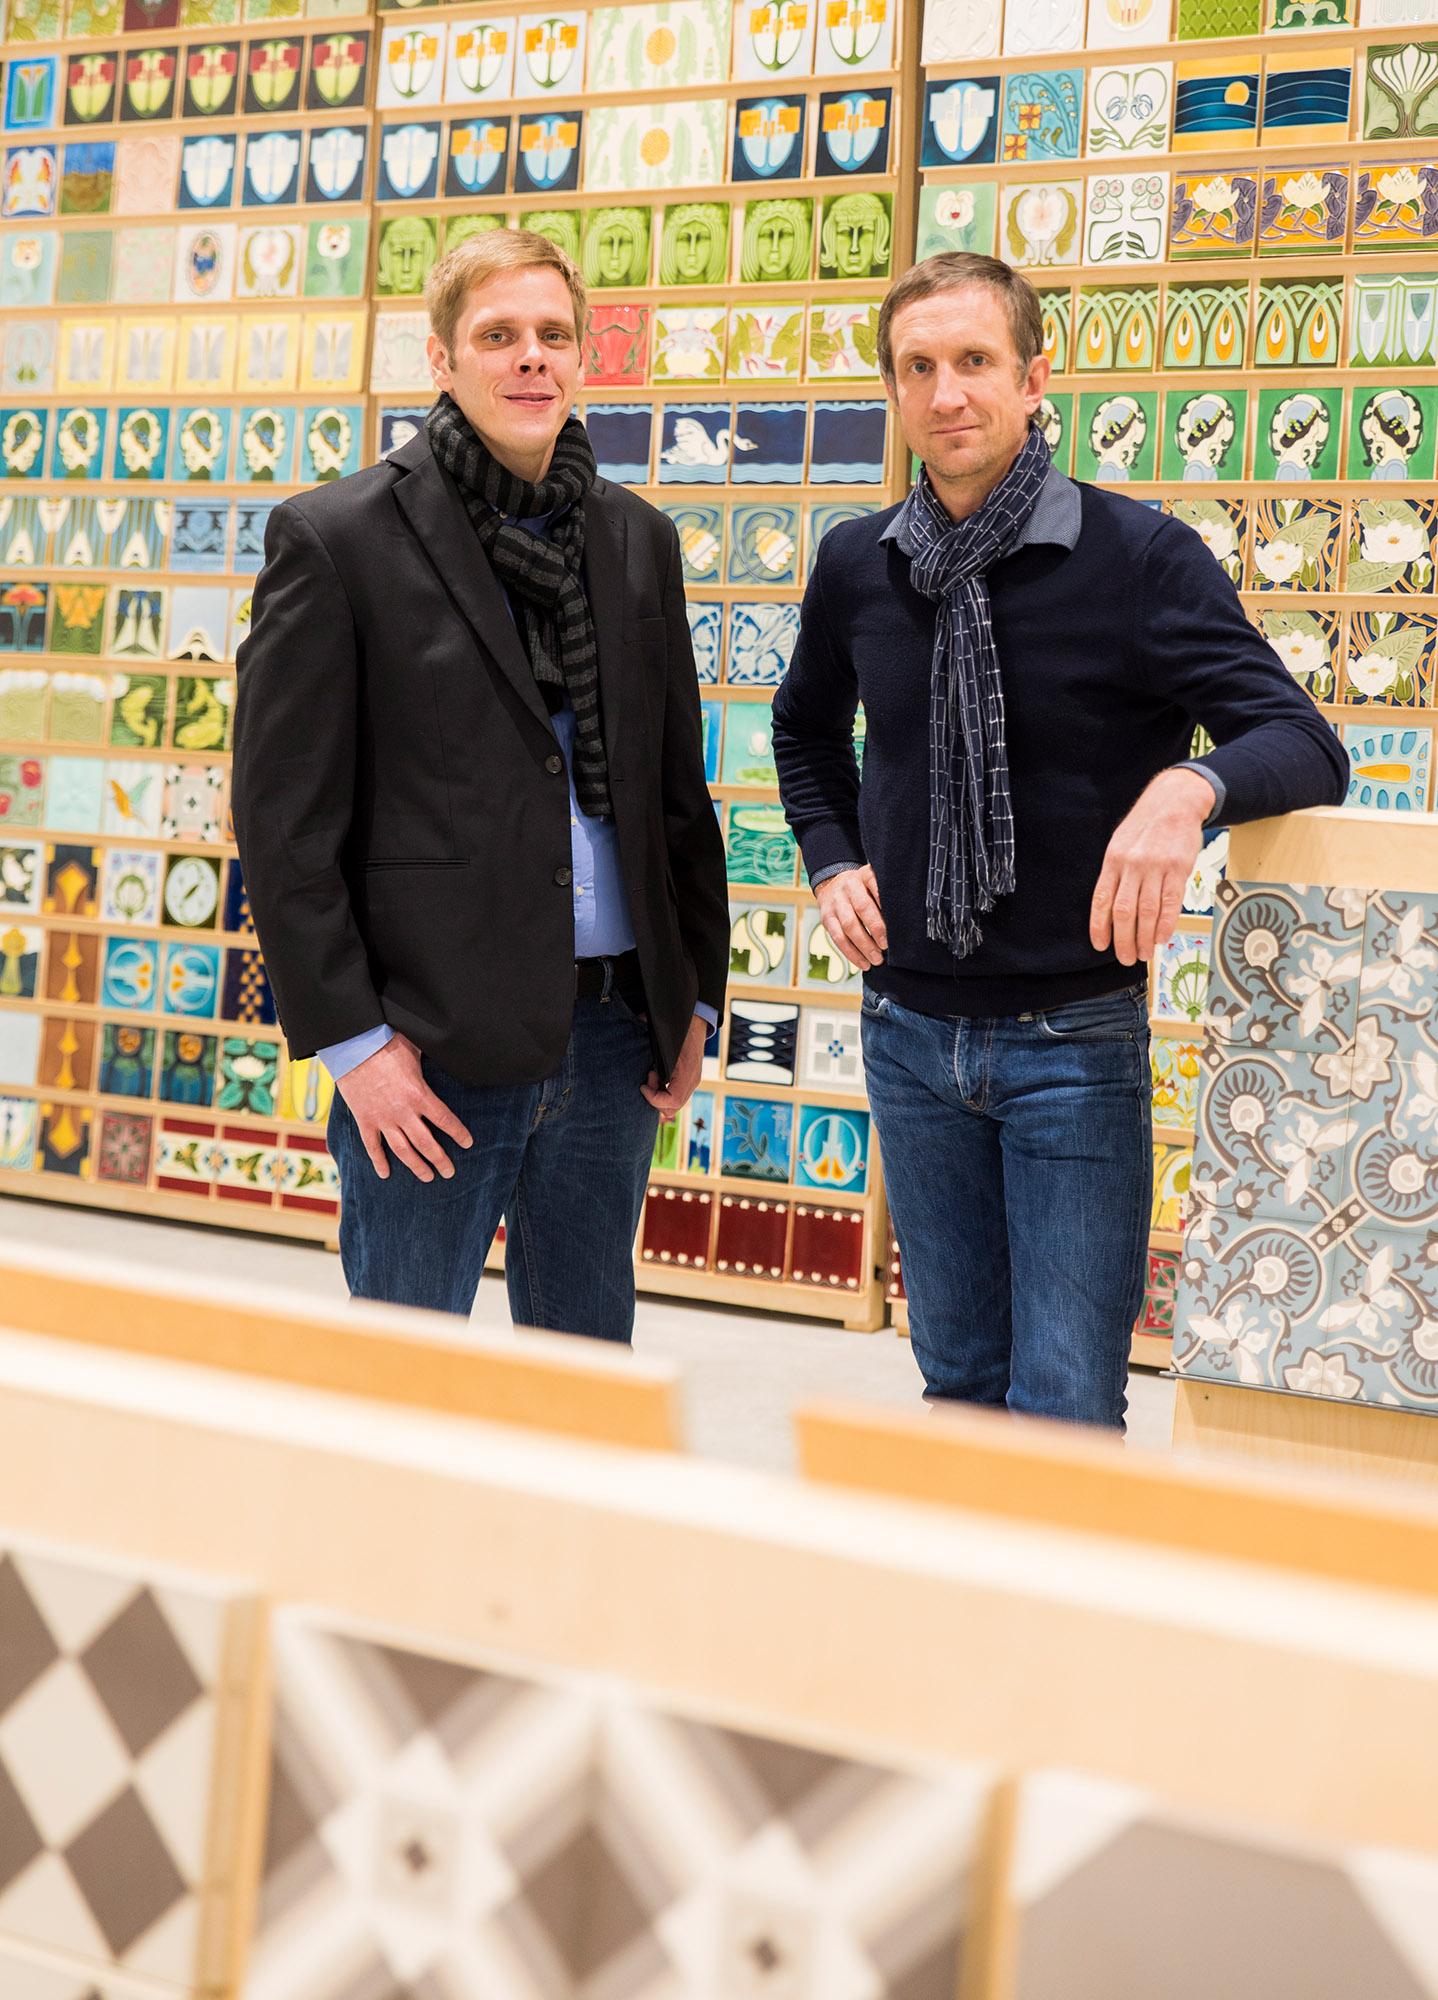 Christian Herold et Tobias Klaus de Golem. - © Stefan Funke / CP / Compartner